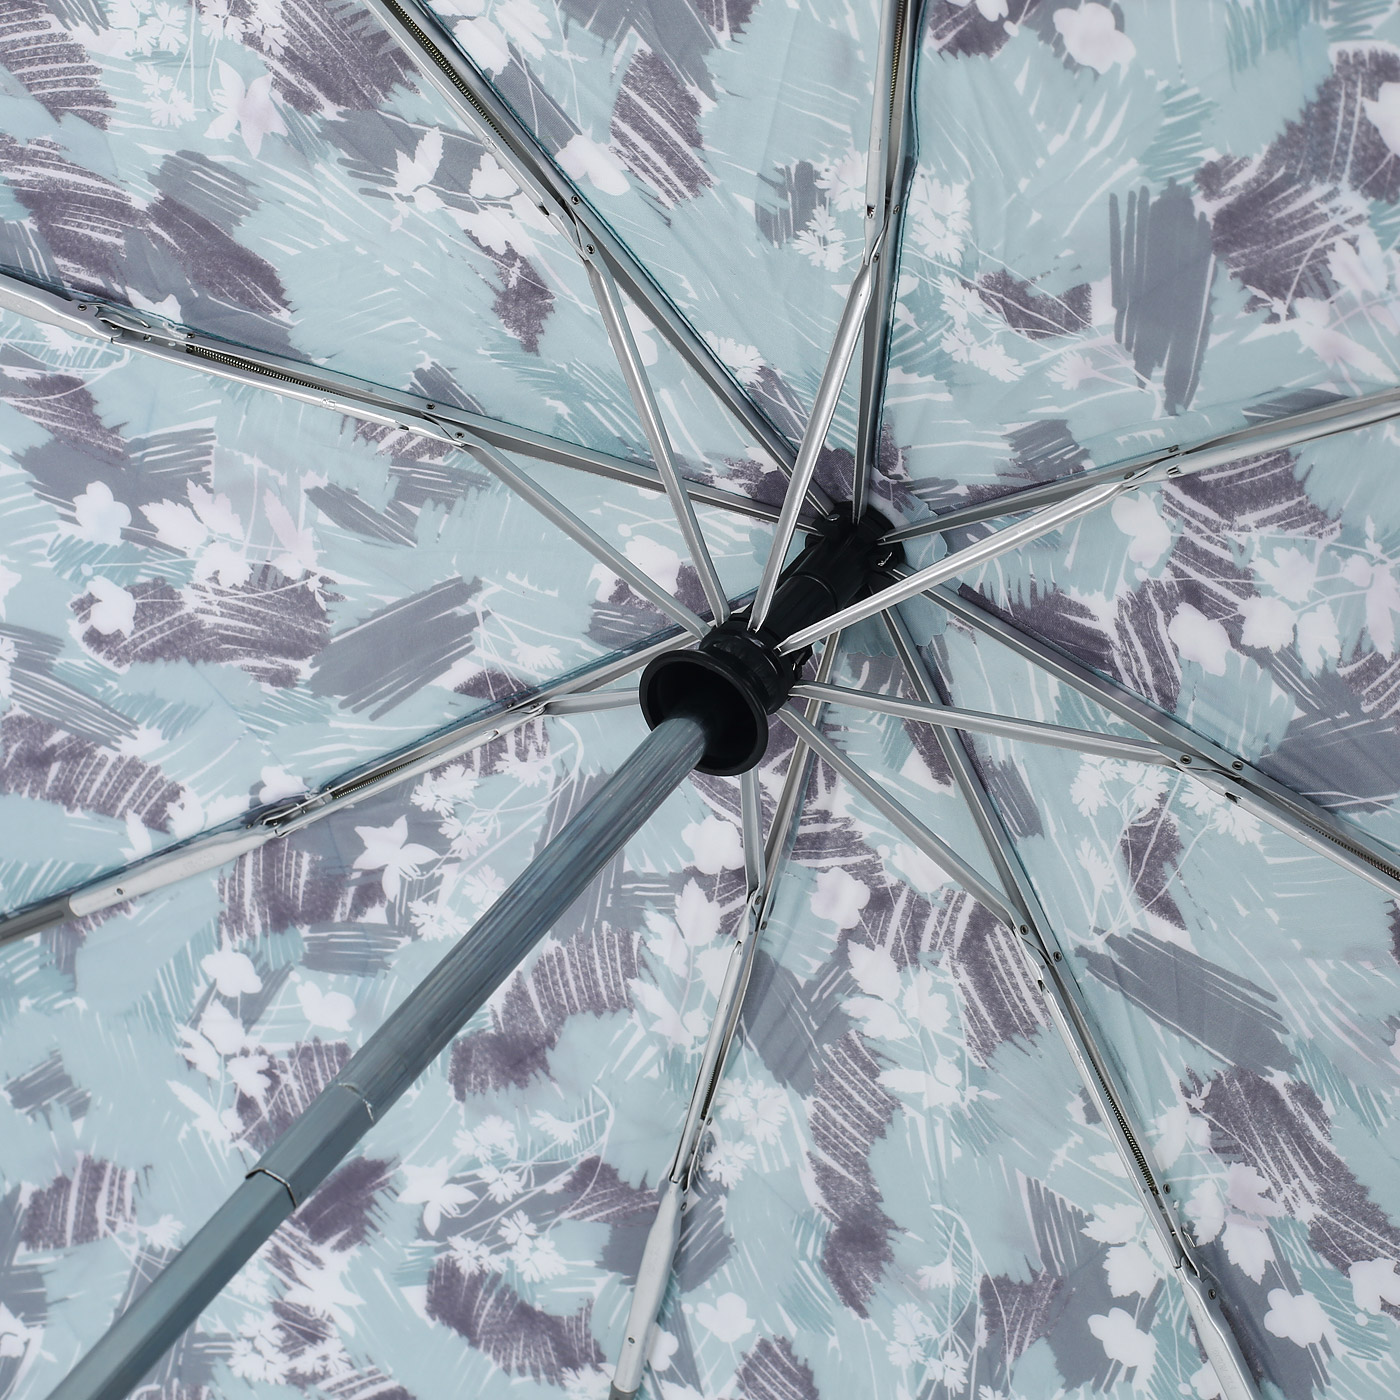 Зонт с системой "Антиветер" Goroshek 